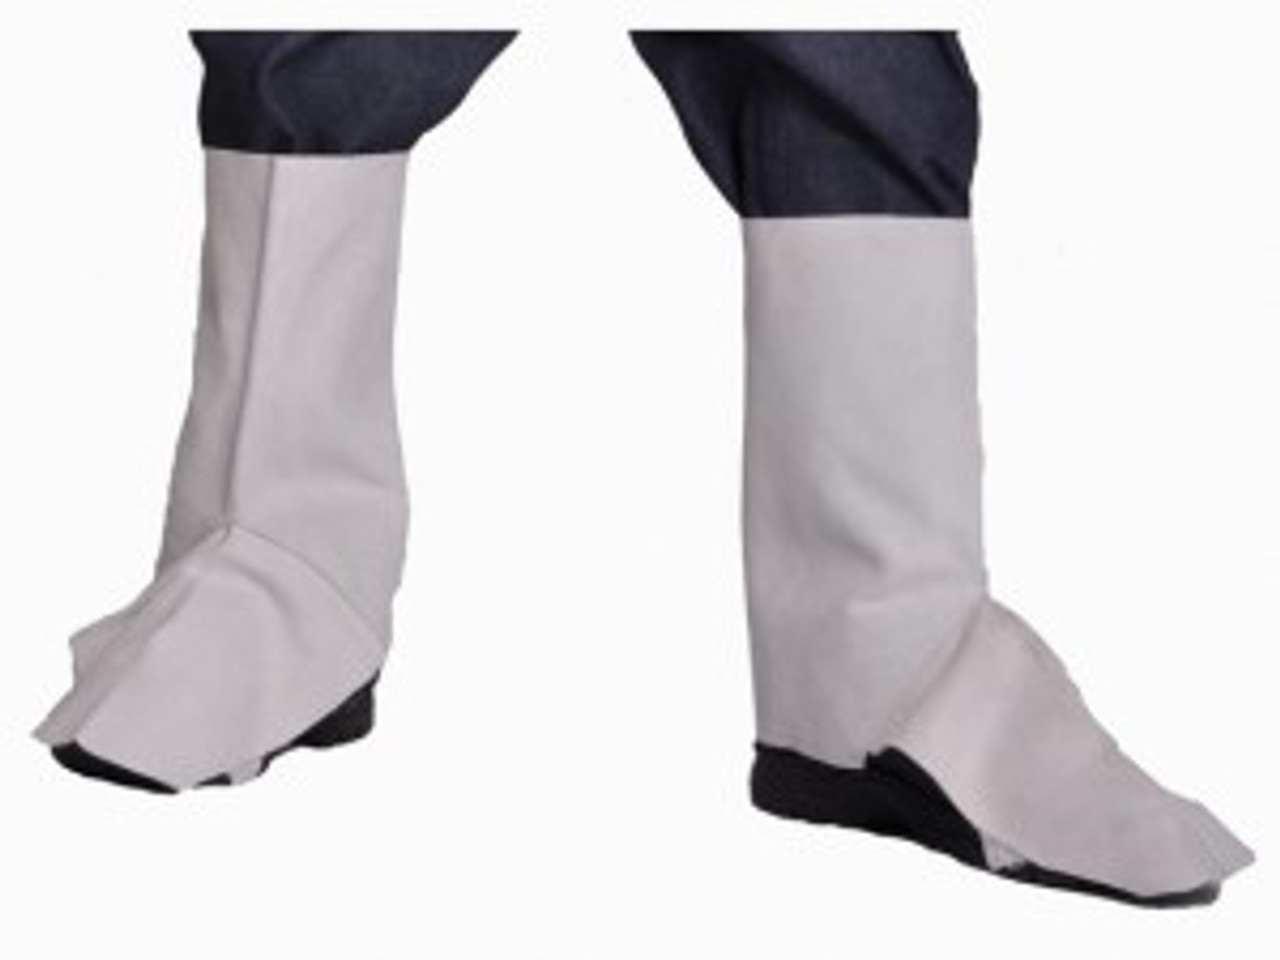 IMPA 851168 Welder's Protective Clothing - Leggings